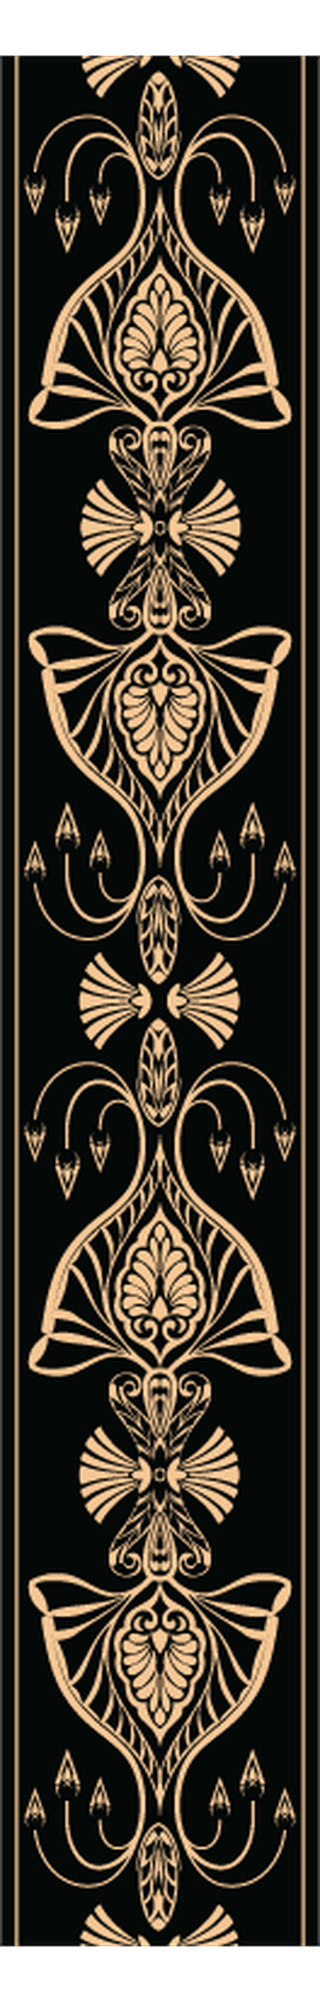 decorativepattern-templates-collection-elegant-retro-repeating-symmetric-353514